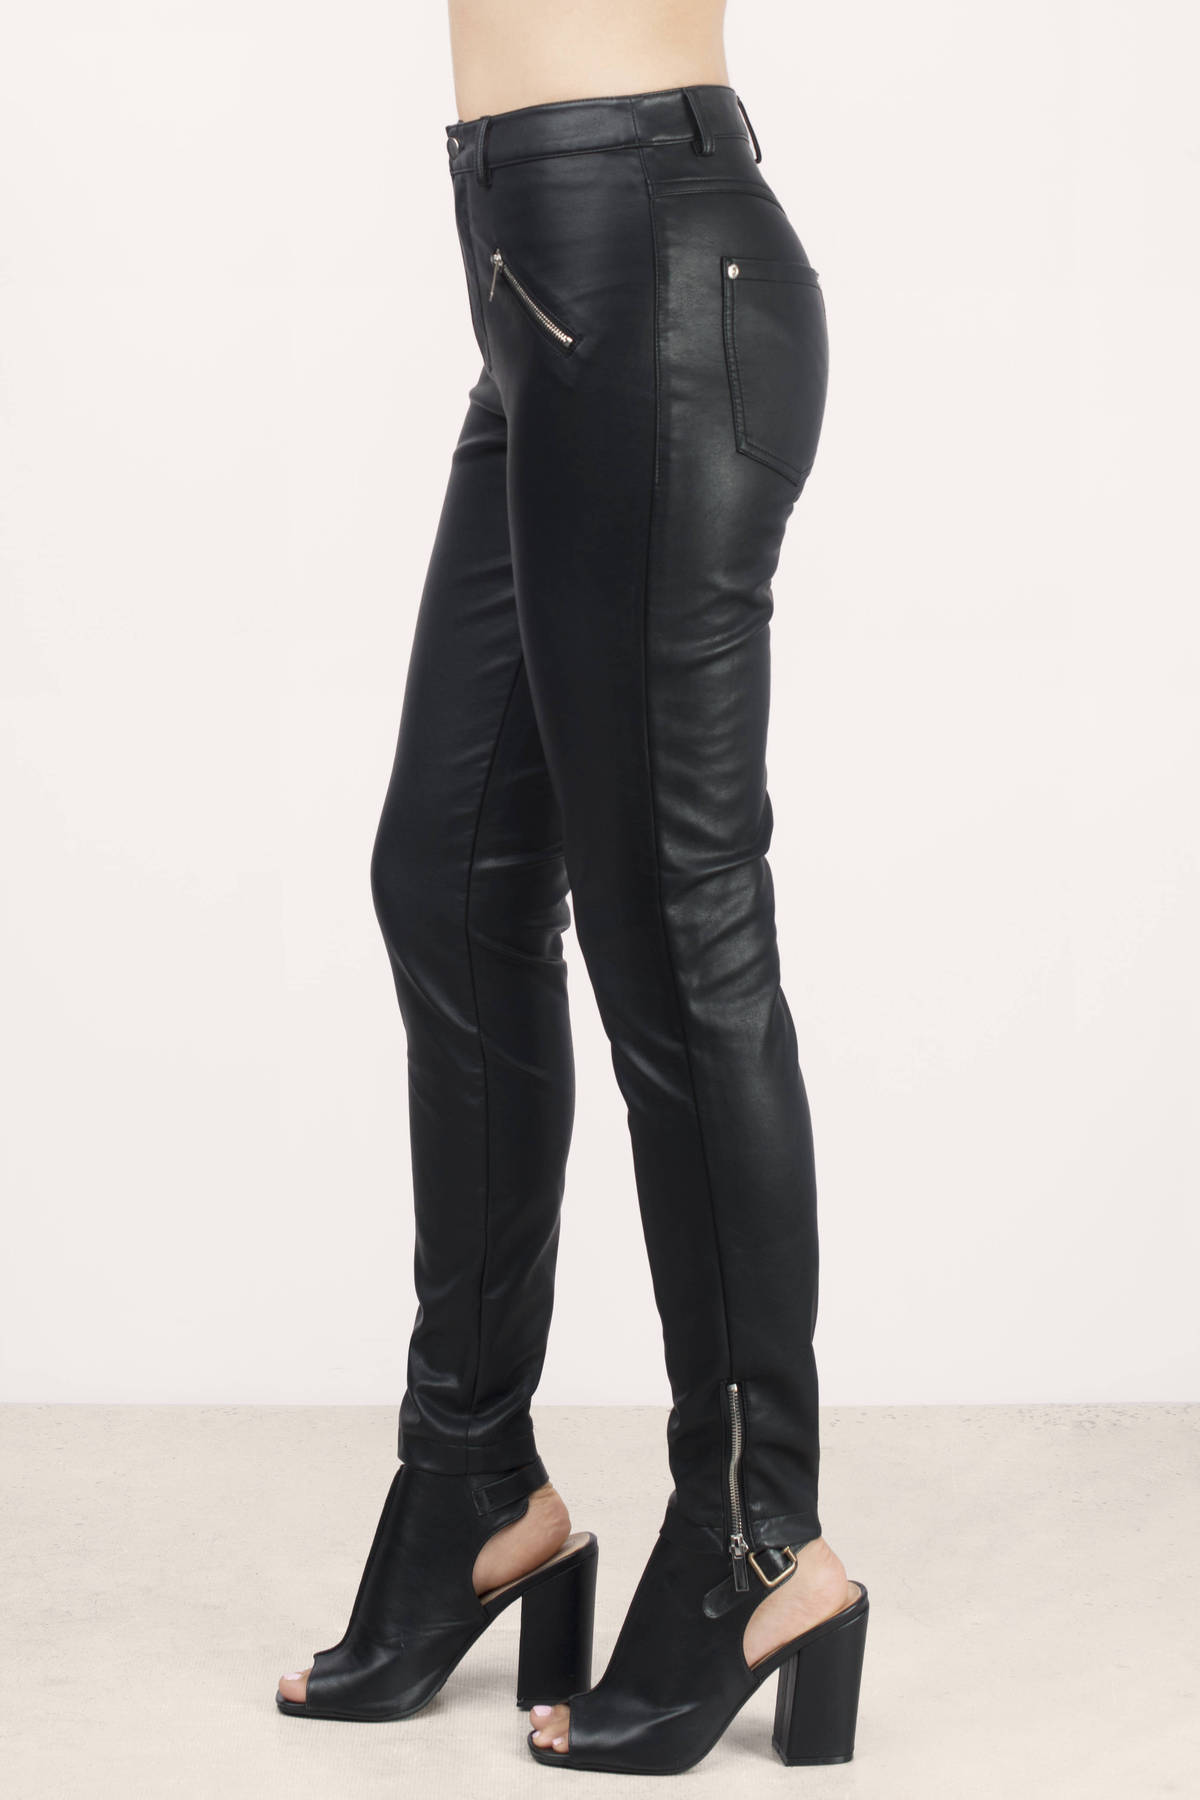 Black Pants - Cropped Pants - Moto Pants - Faux Leather Pants